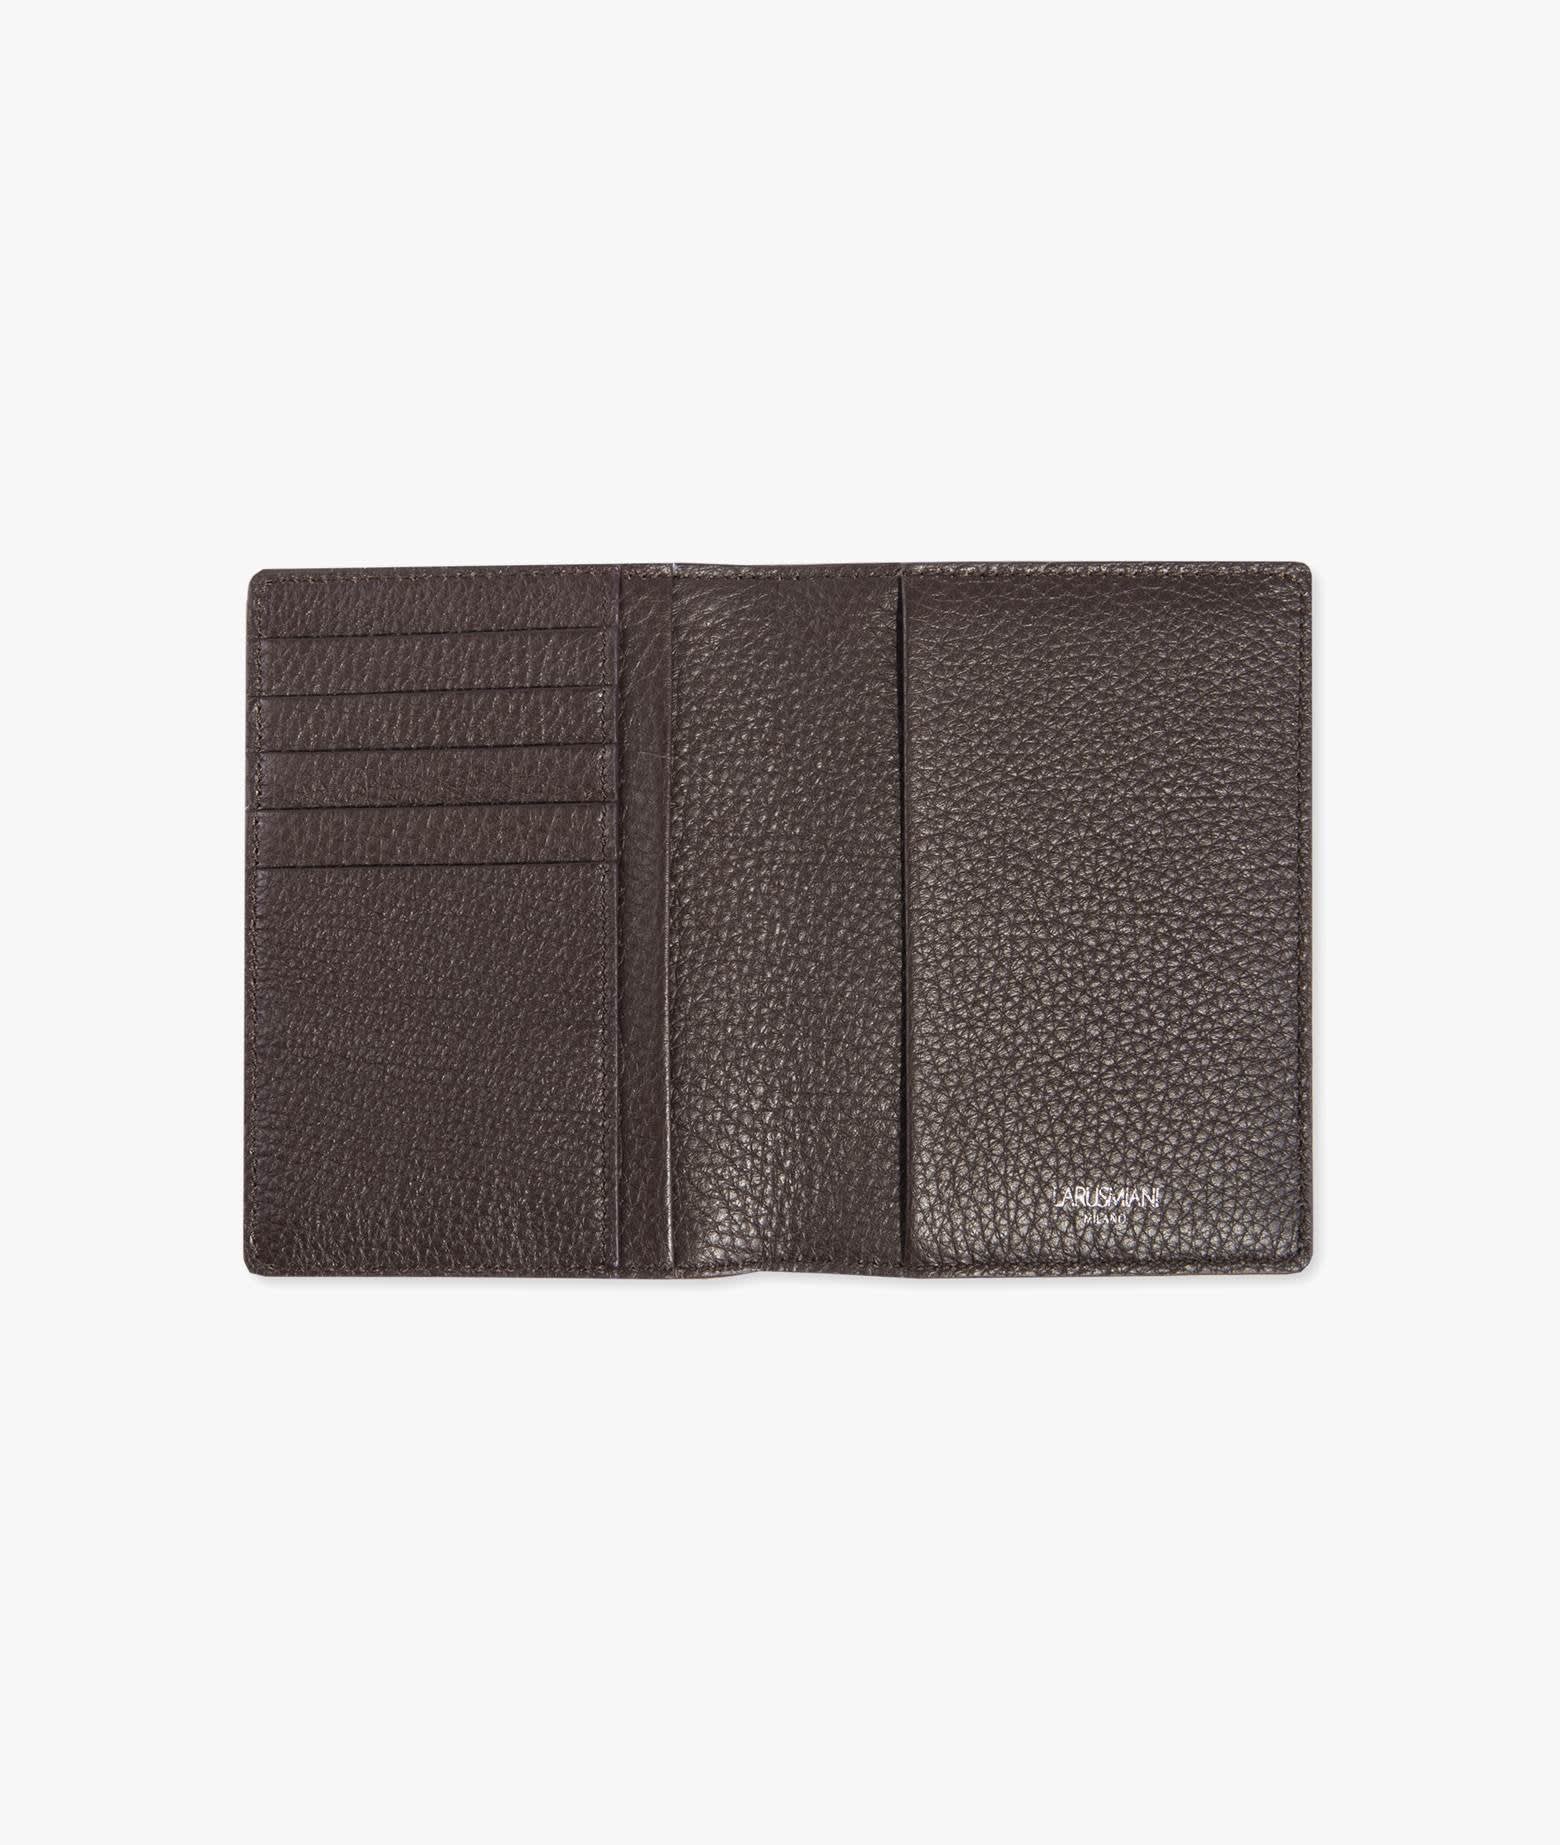 Shop Larusmiani Passport Cover Fiumicino Wallet In Chocolate